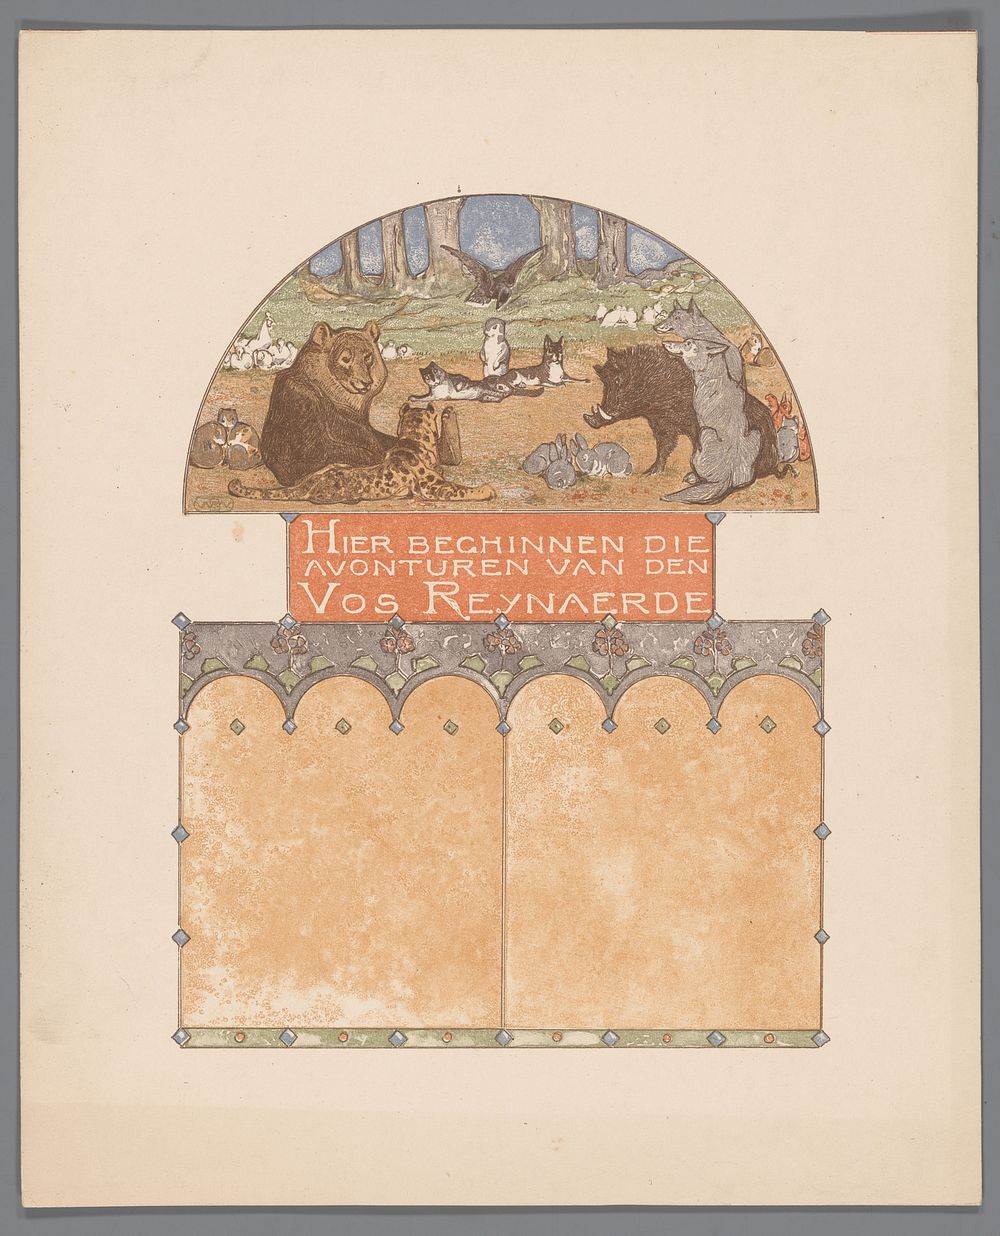 Groep dieren uit Reinaert de Vos (c. 1910) by Bernard Willem Wierink